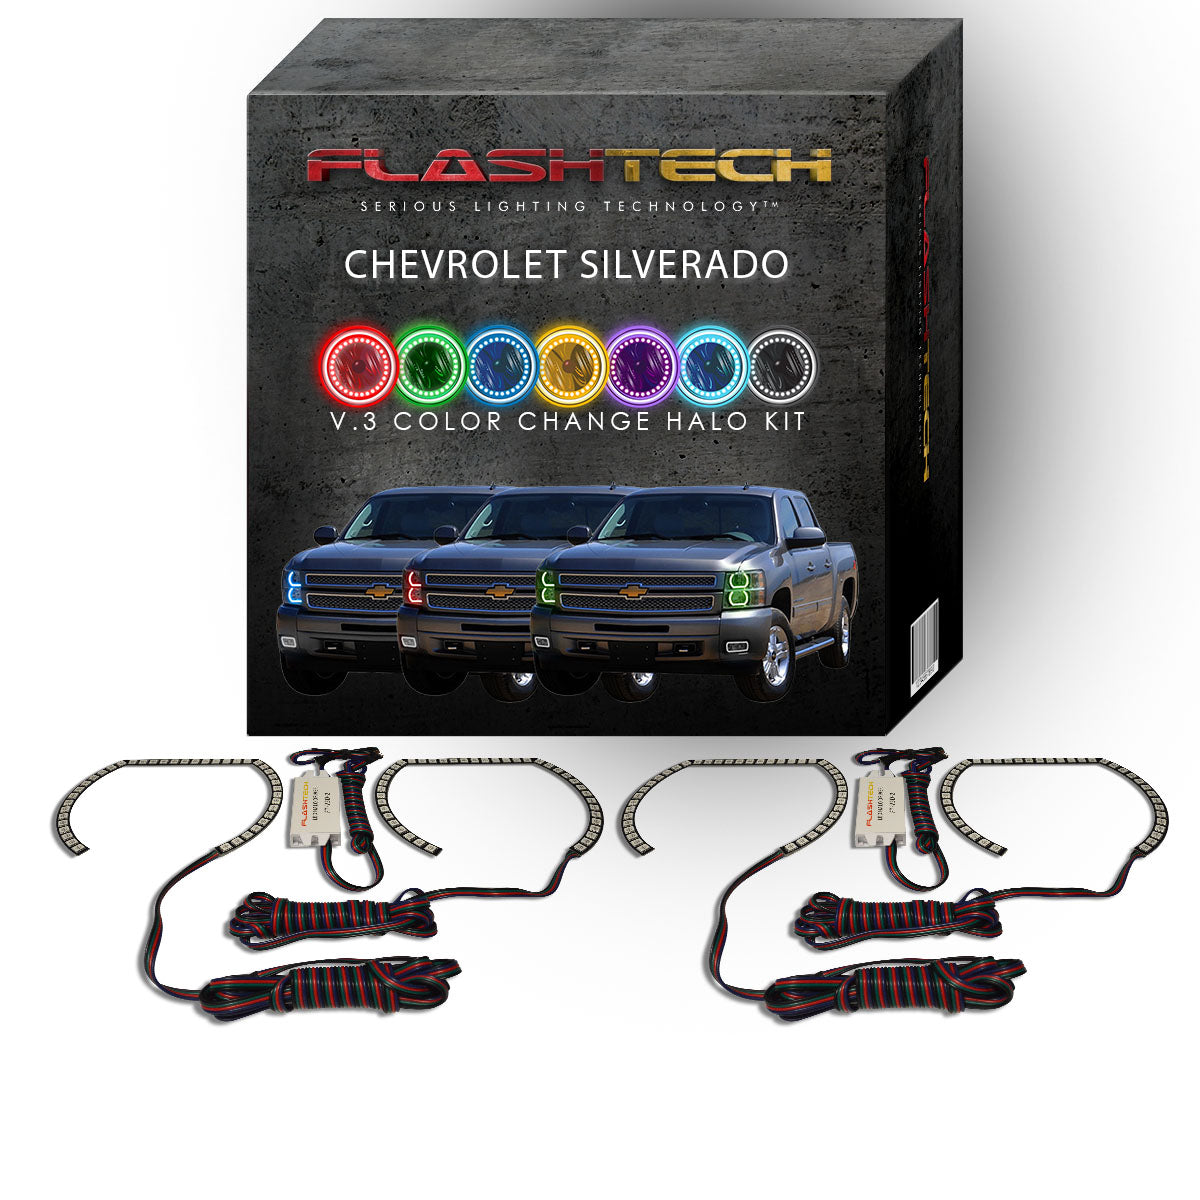 Chevrolet-Silverado-2007, 2008, 2009, 2010, 2011, 2012, 2013-LED-Halo-Headlights-RGB-No Remote-CY-SV0713-V3H